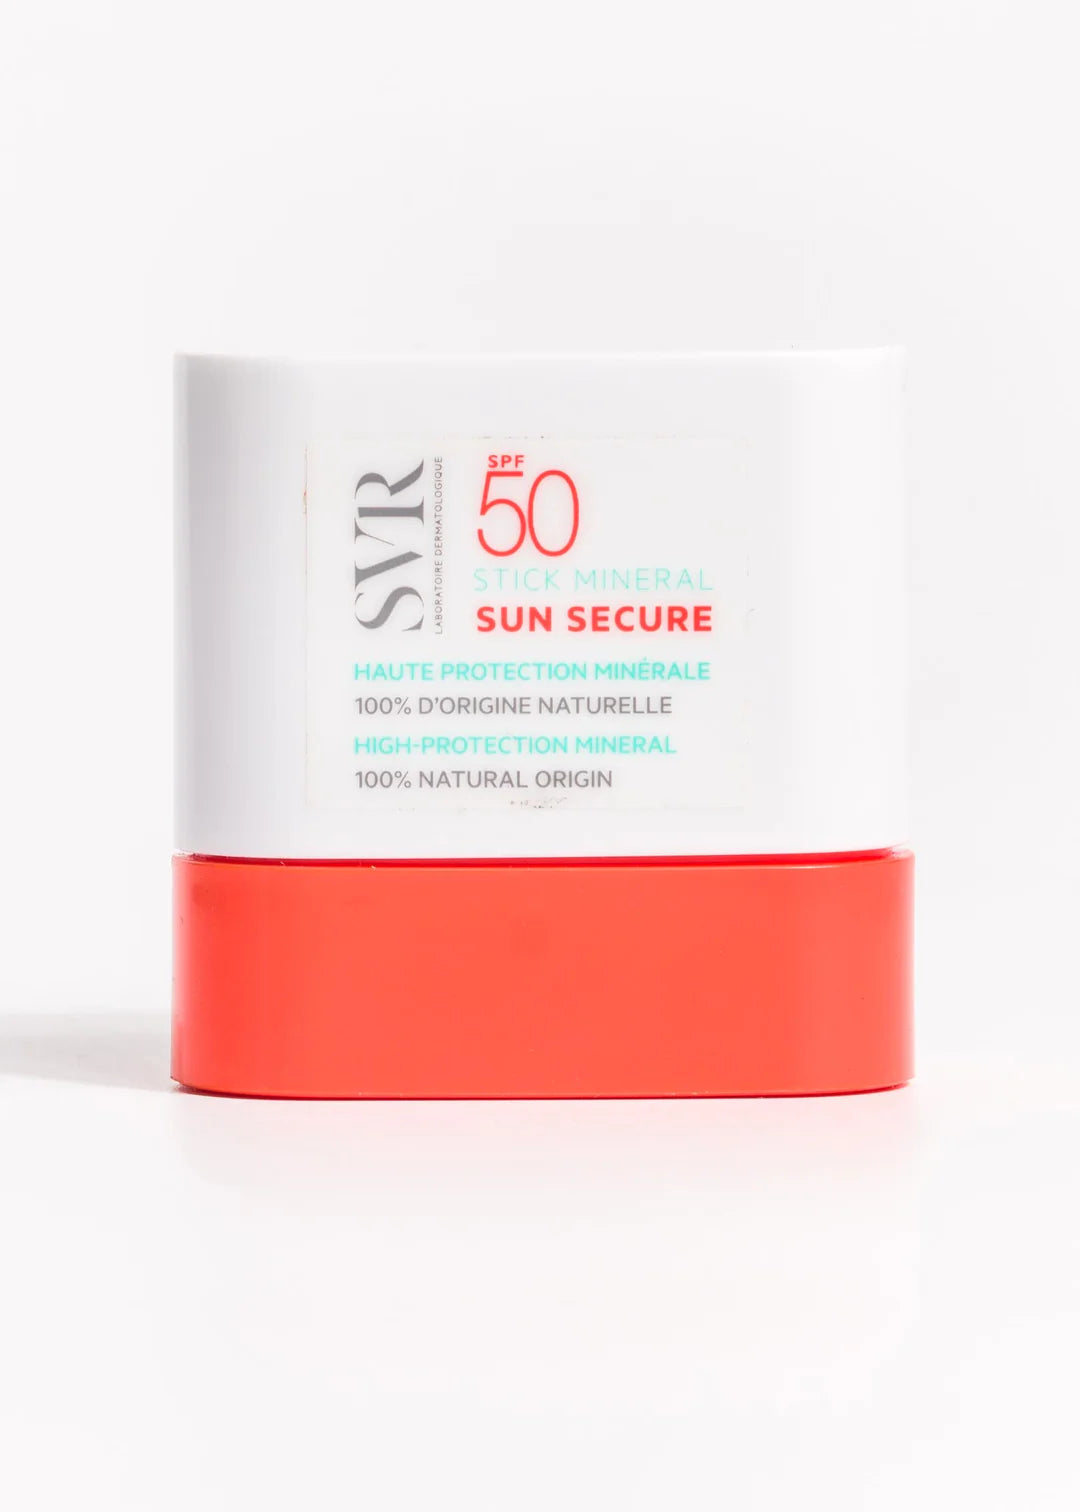 Sun Secure stick mineral SPF 50 - SVR